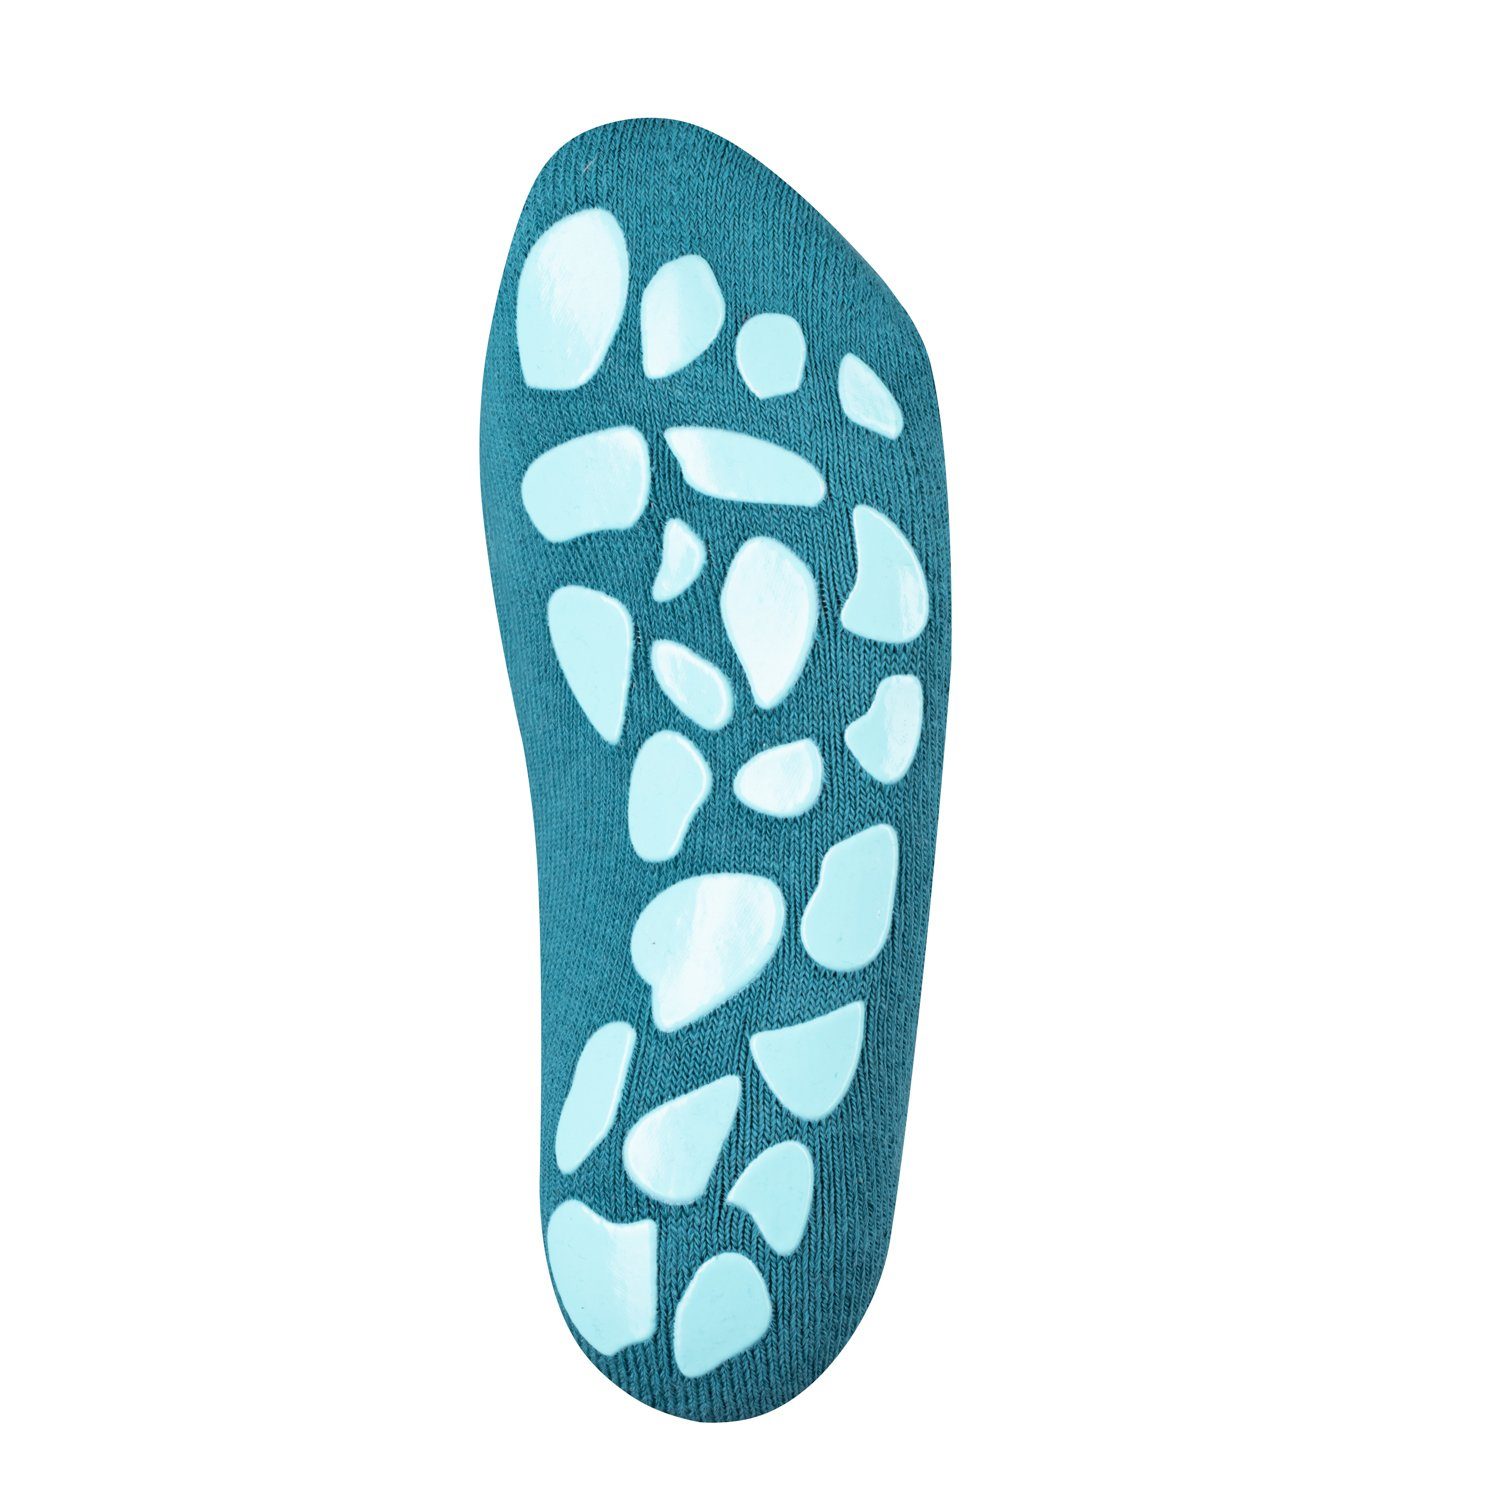 TROLLKIDS Socken Teal-Blau/Wasserblau Anti Socks Slip